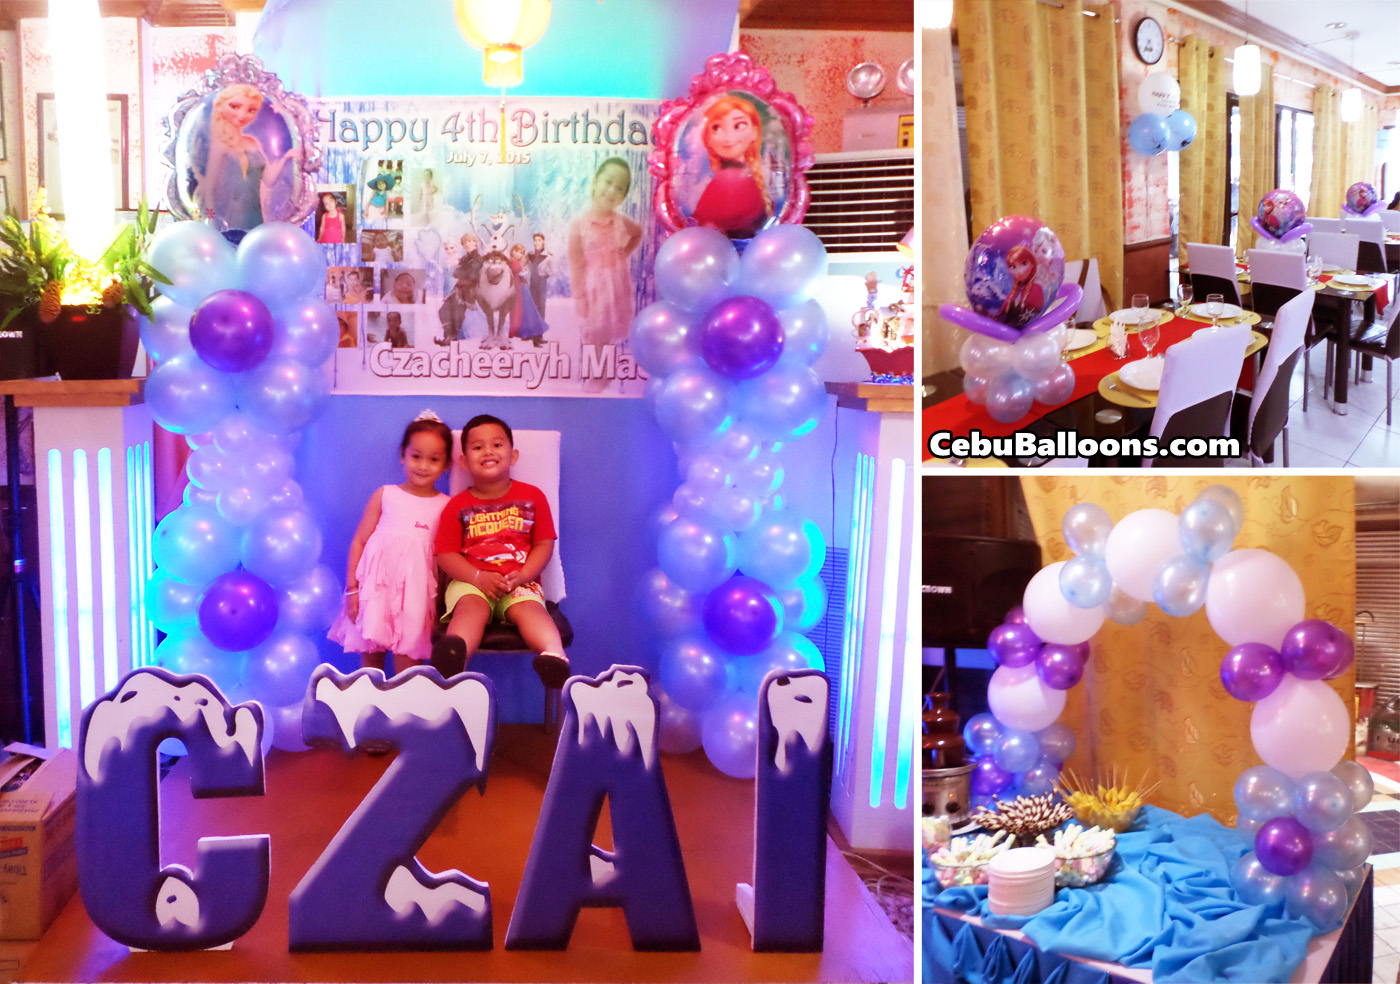 Disney Frozen Balloon Decoration With Styro Letters At Villa Pilipino Restaurant Cebu Balloons And Party Supplies - cebu balloons yesterdays roblox inspired full styro